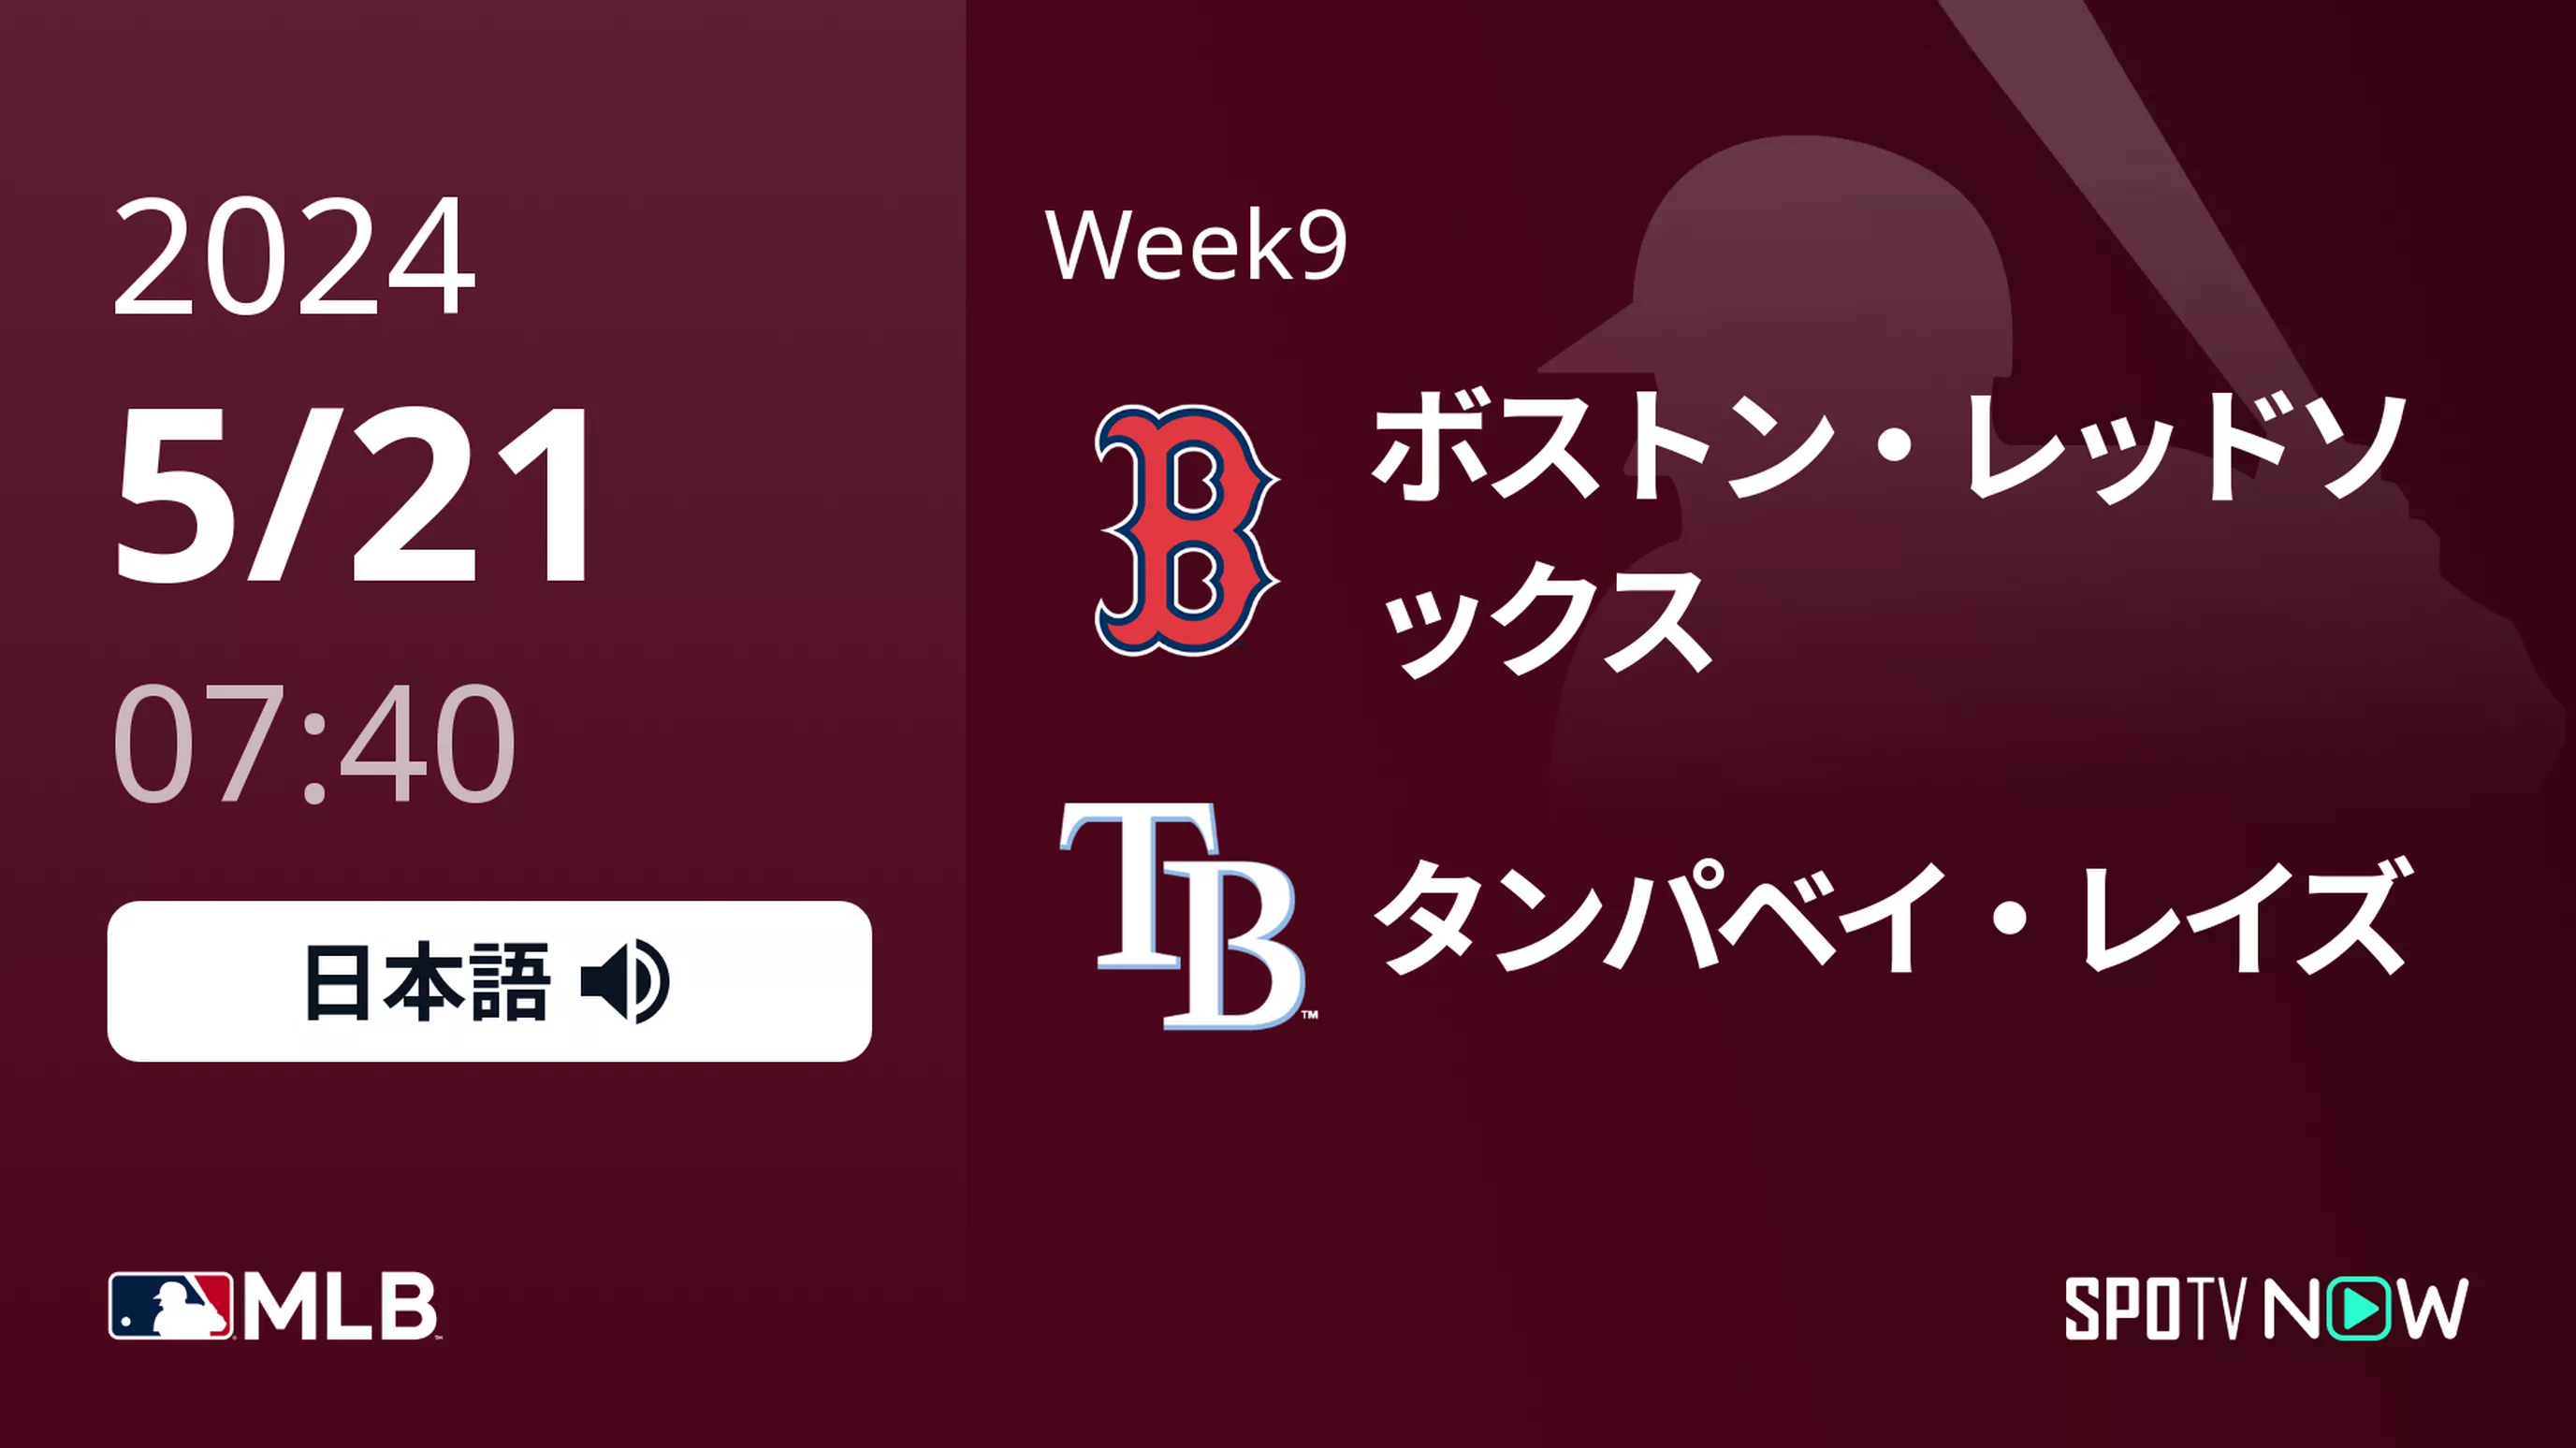 Week9 Rソックス vs レイズ 5/21[MLB]